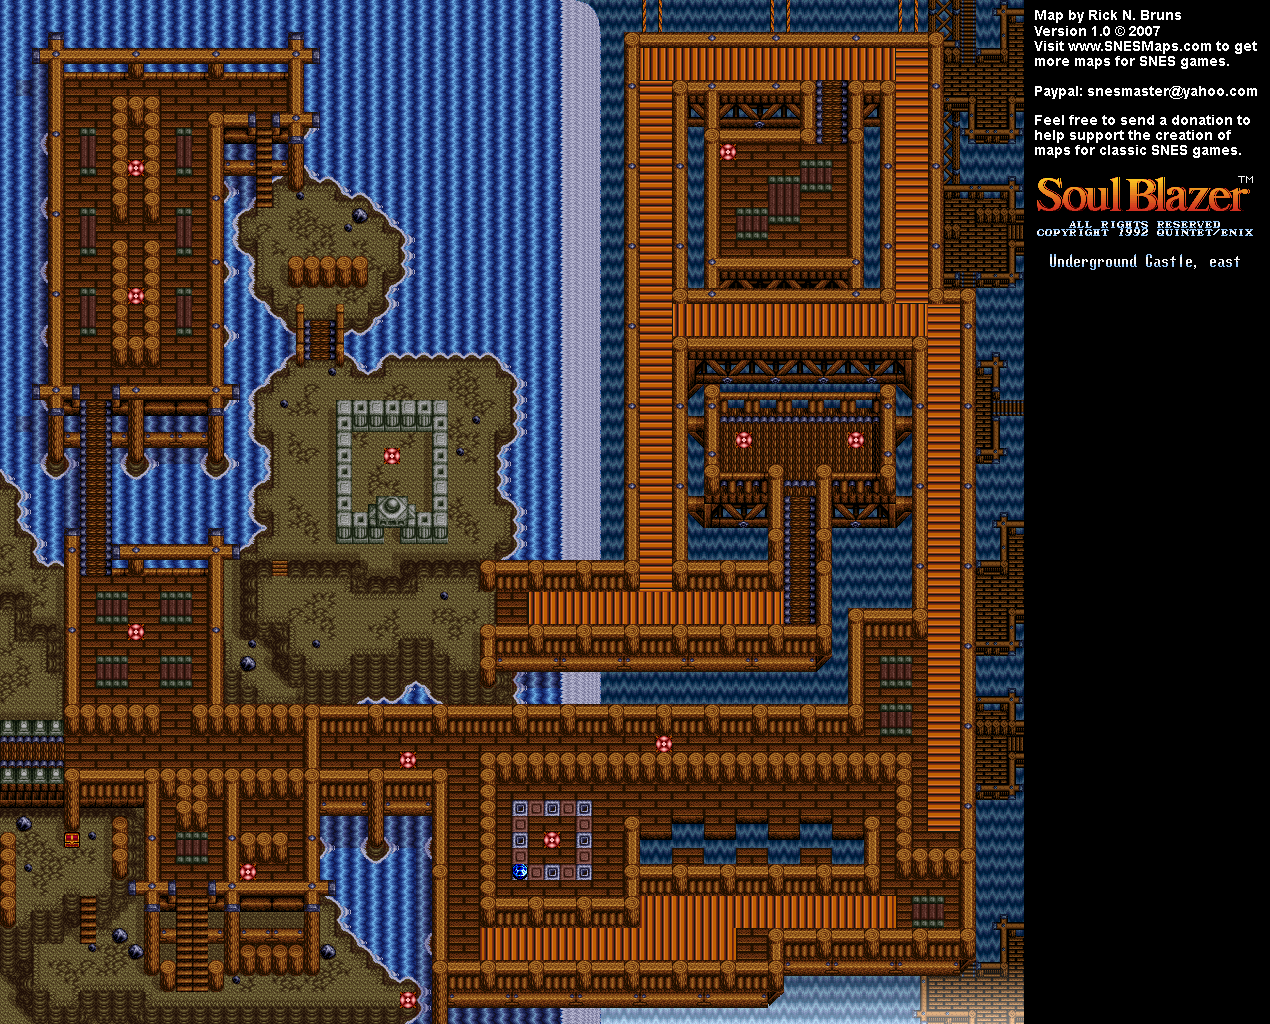 Soul Blazer - Underground Castle, East (Before) Map - SNES Super Nintendo